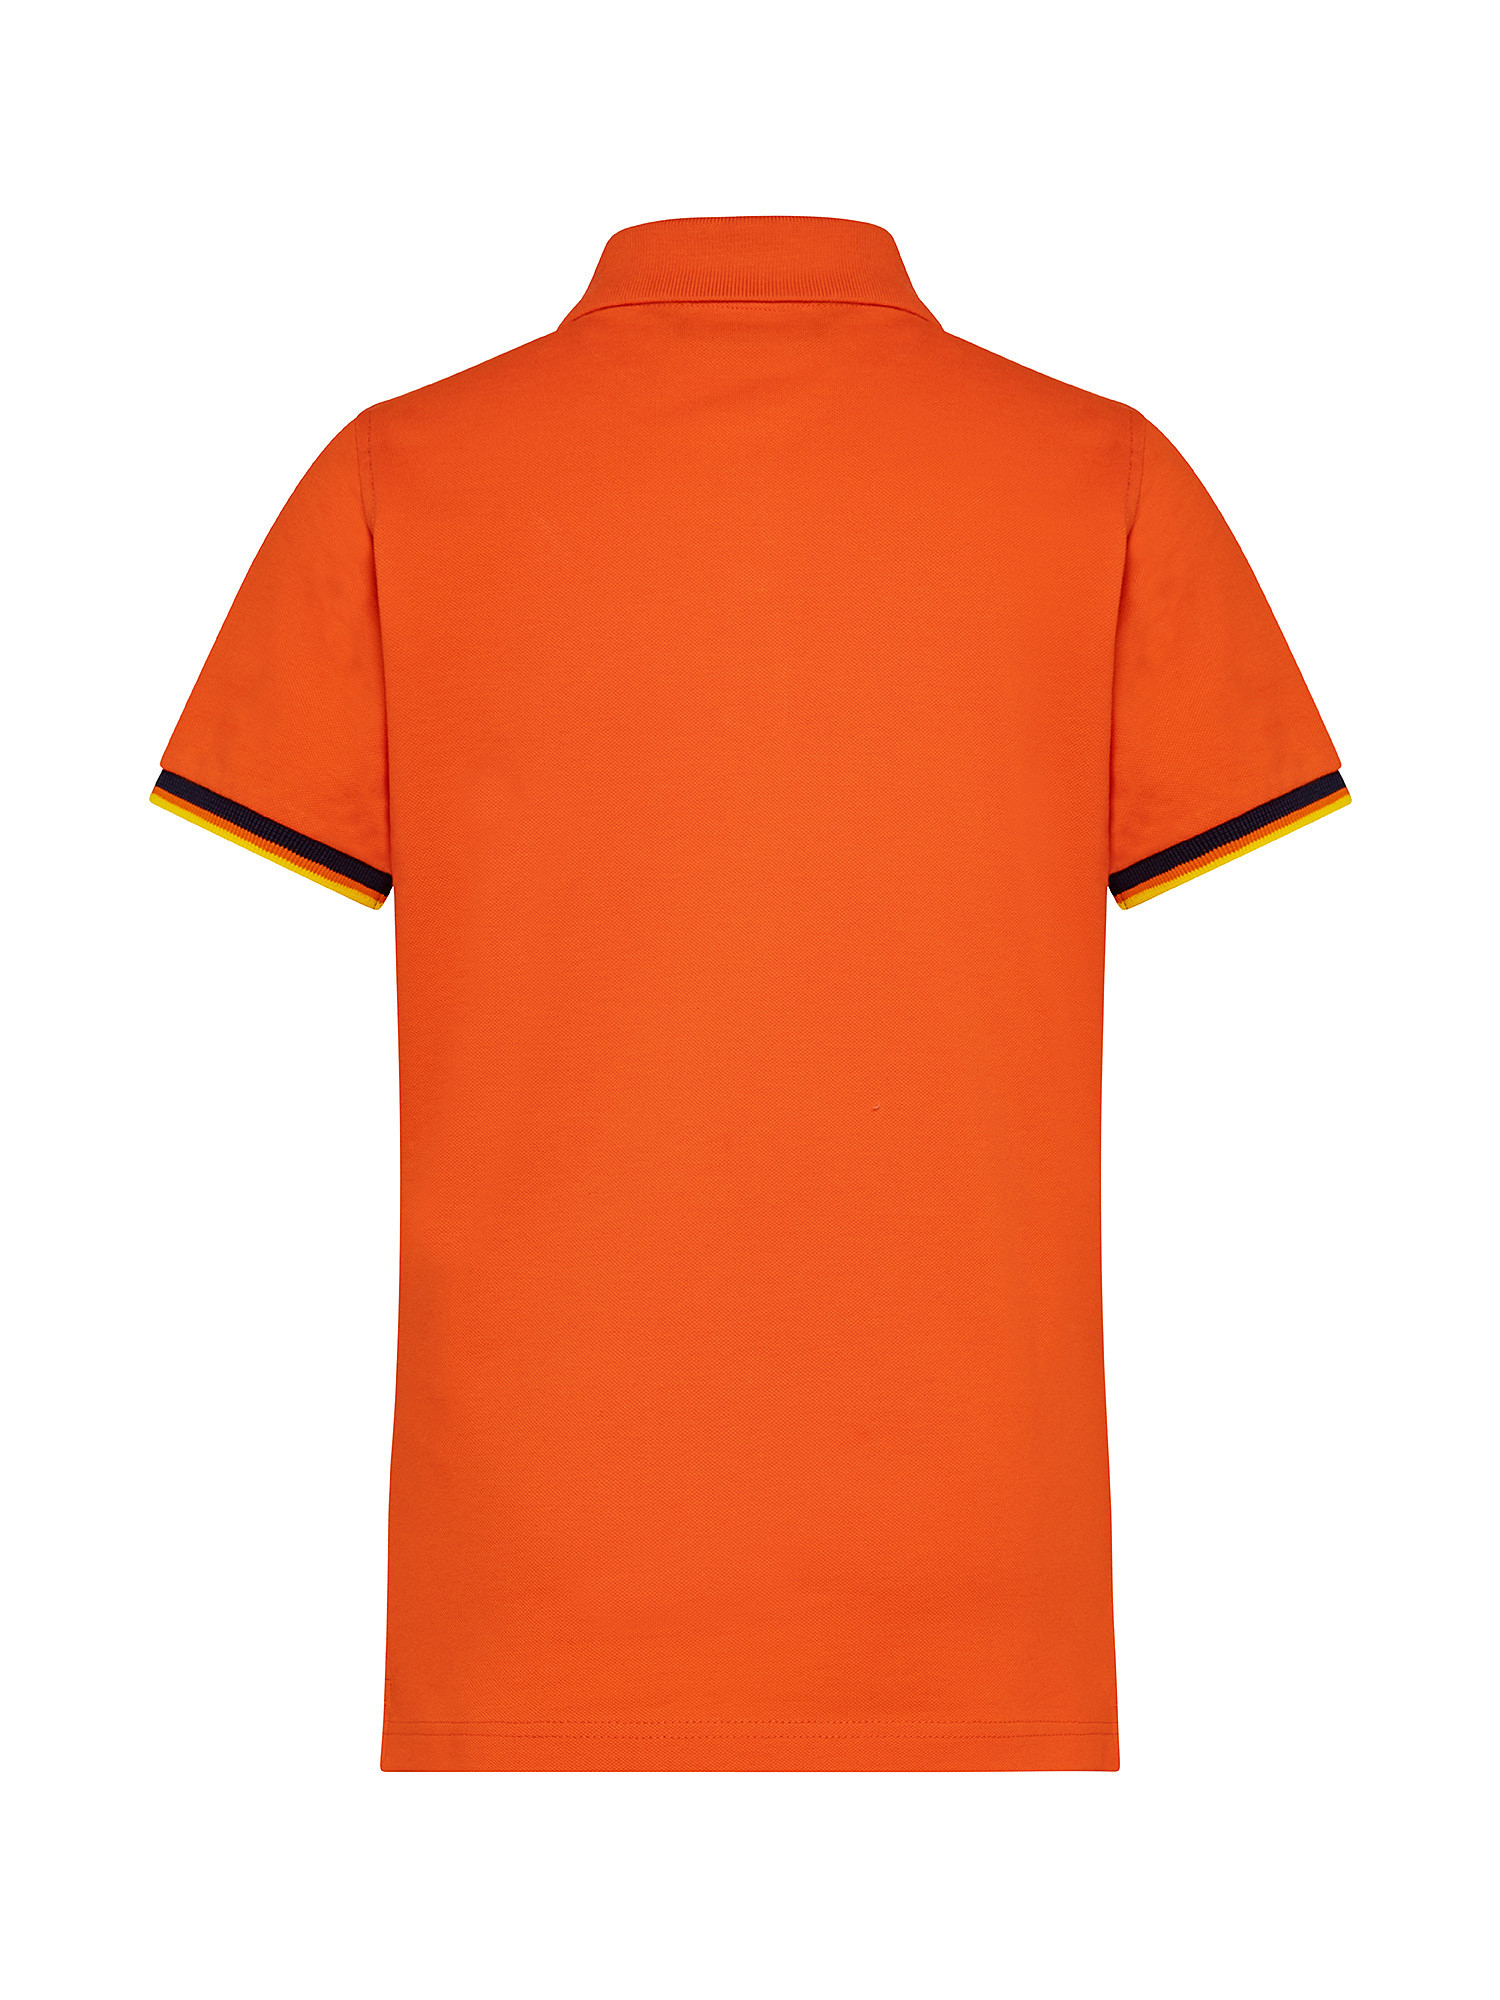 Polo ragazzo slim fit, Arancione, large image number 1